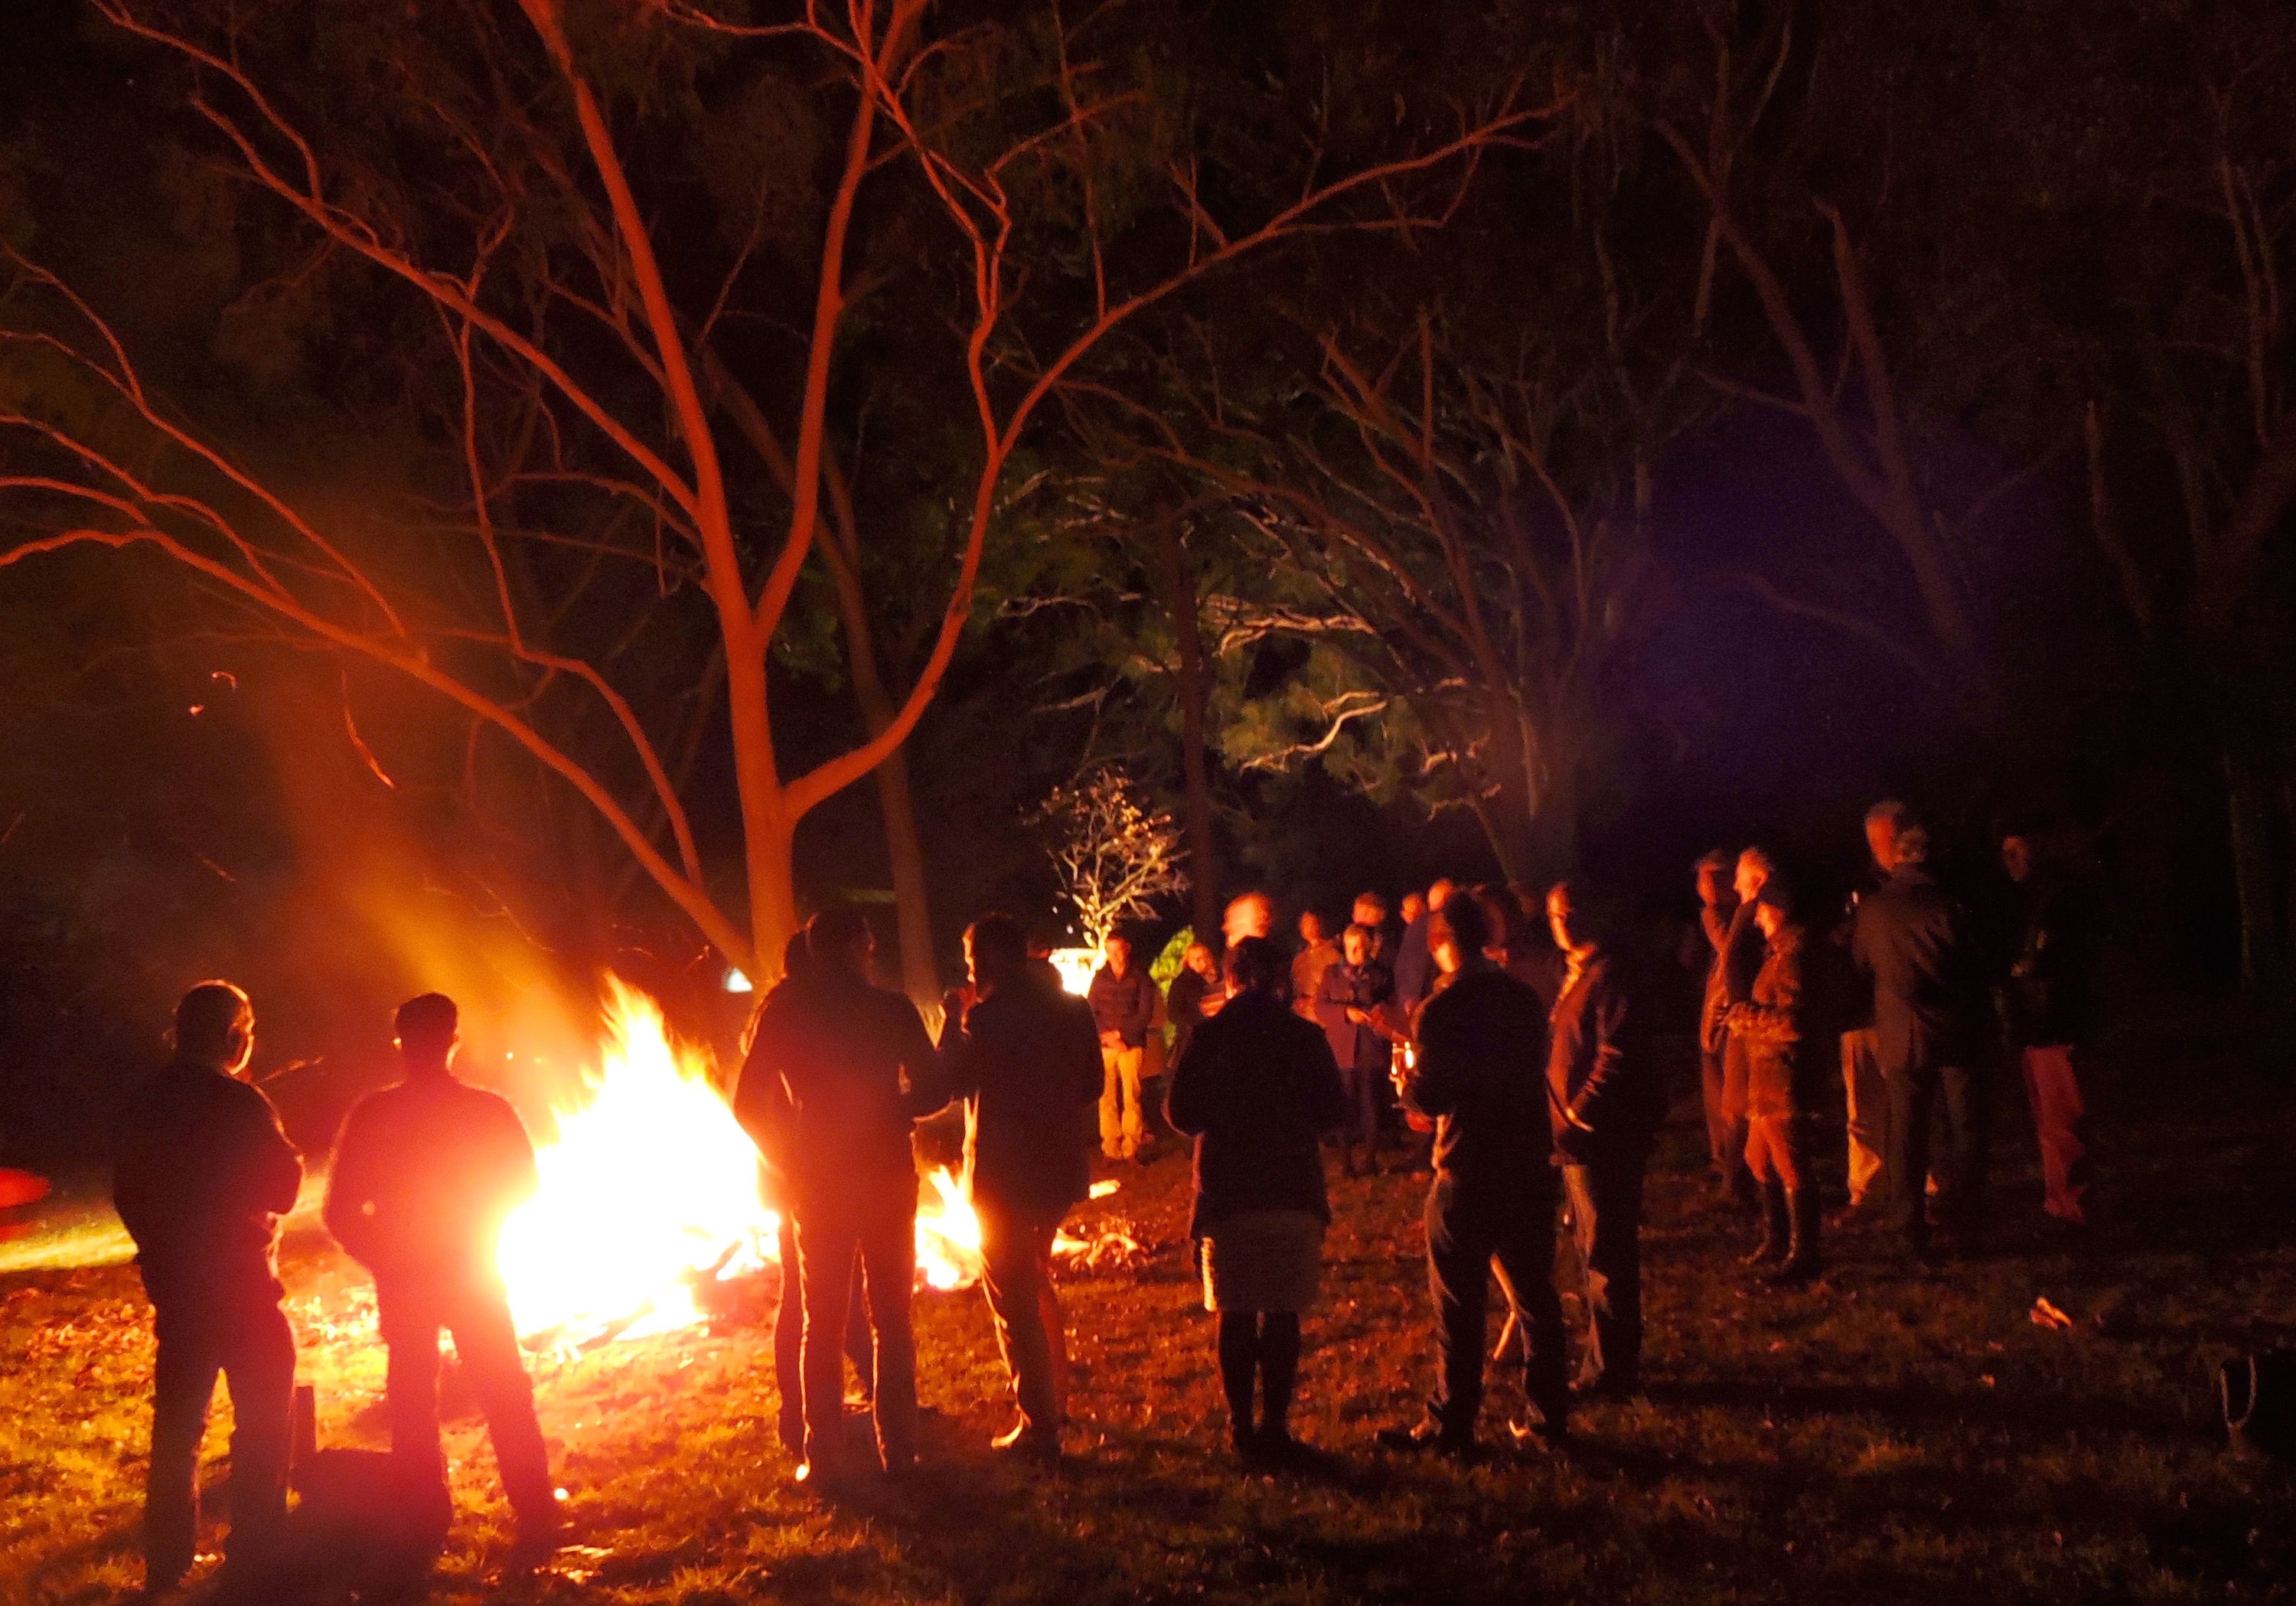 Bonfire at Bless This Harvest 2015